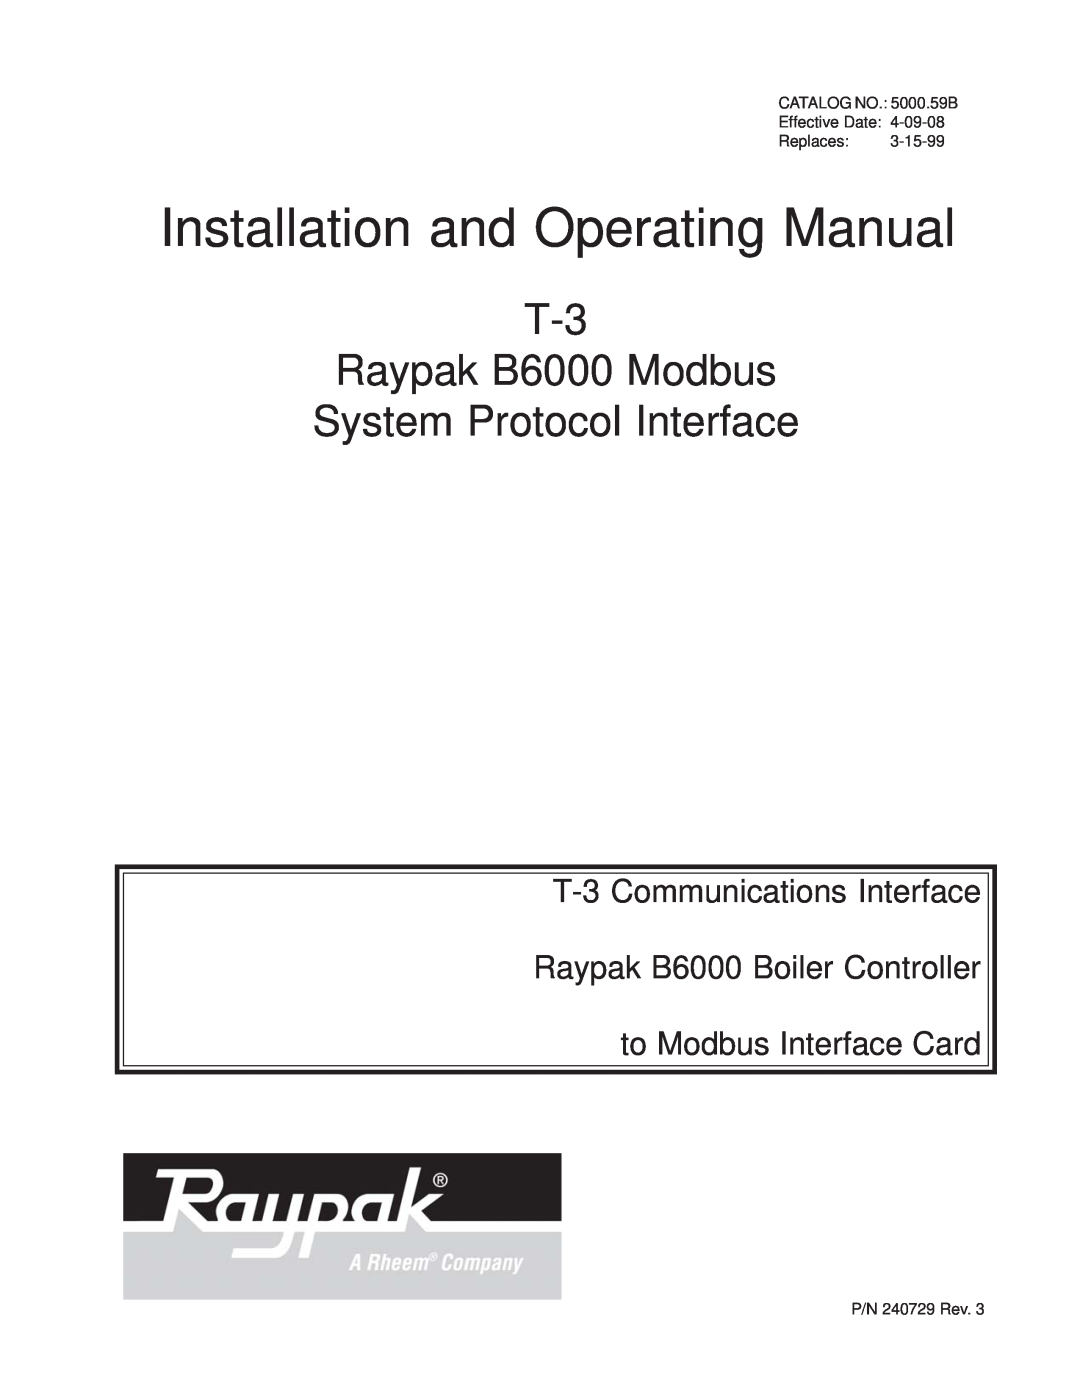 Raypak manual Installation and Operating Manual, B6000TM, Boiler Management System 